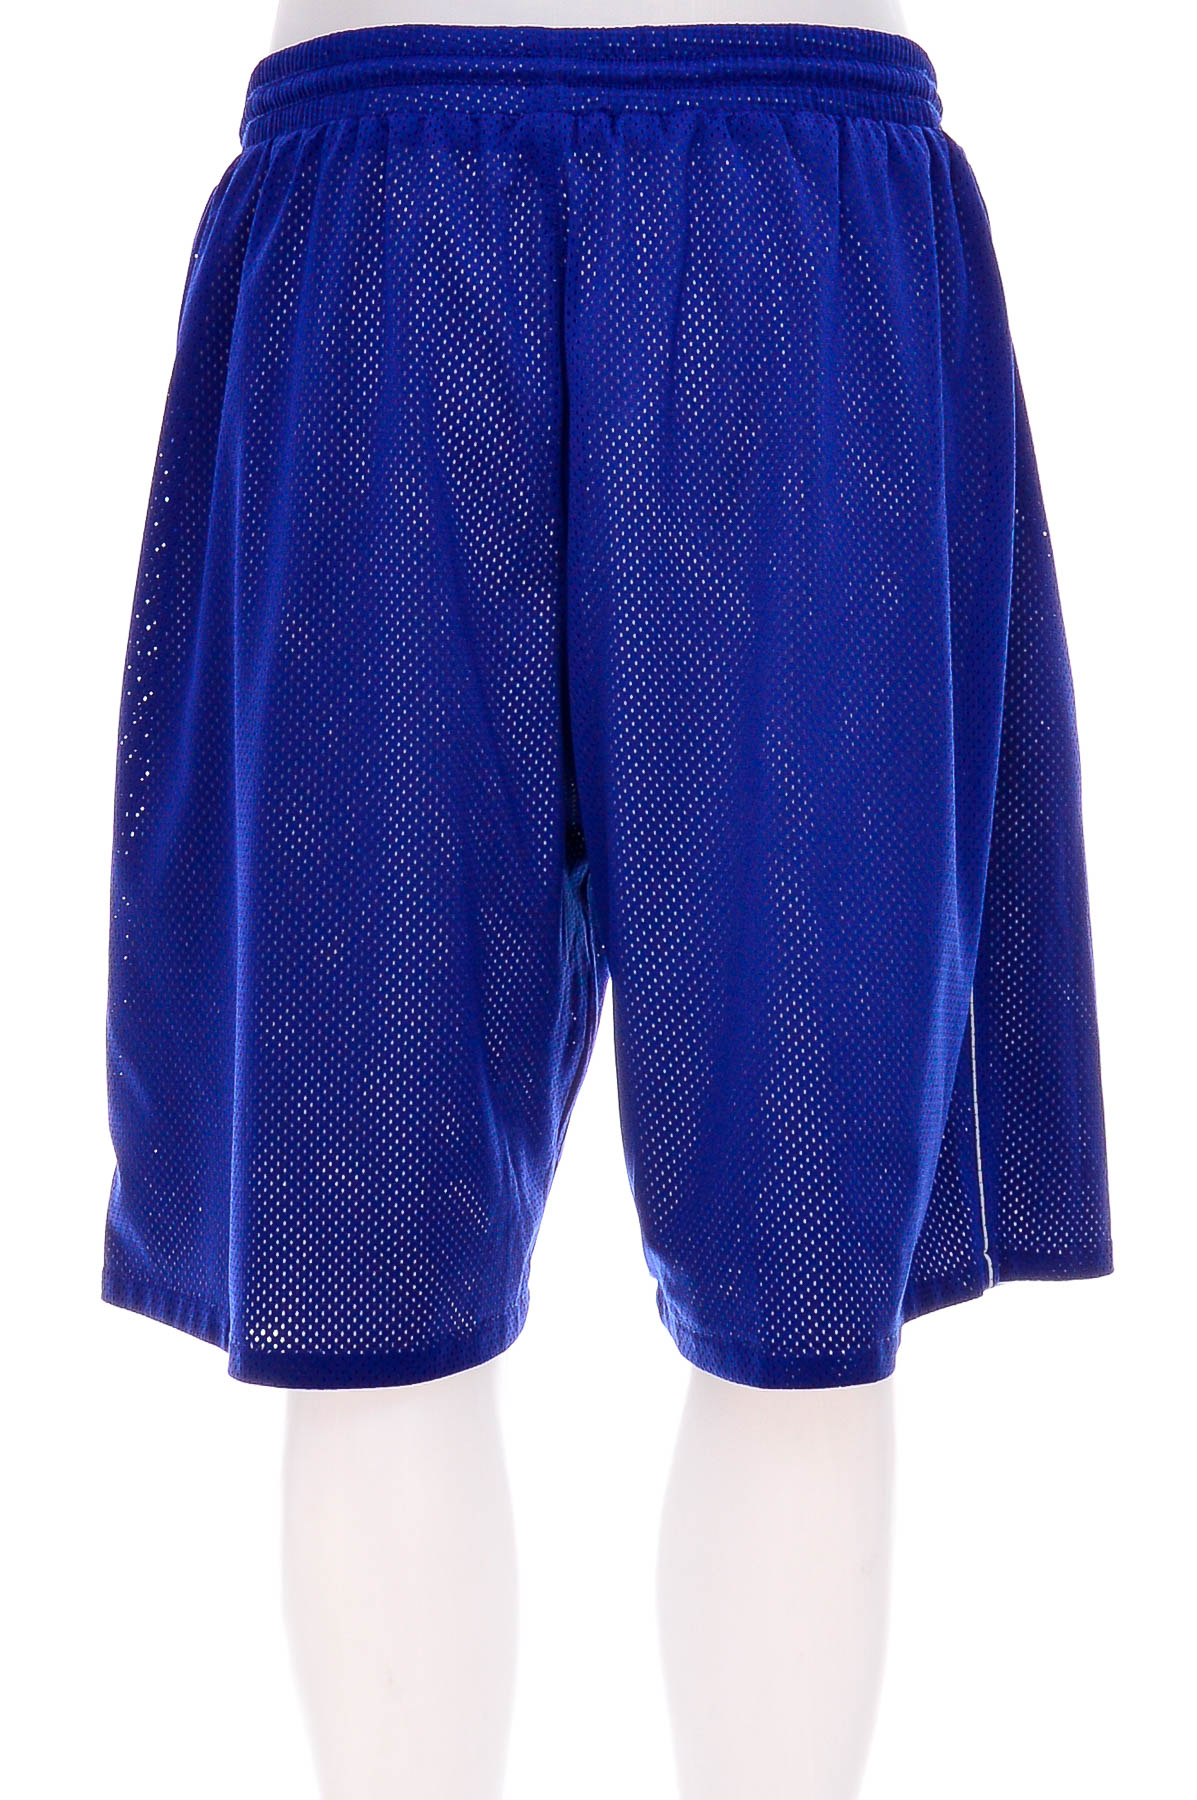 Men's shorts reversibleи - Spalding - 2